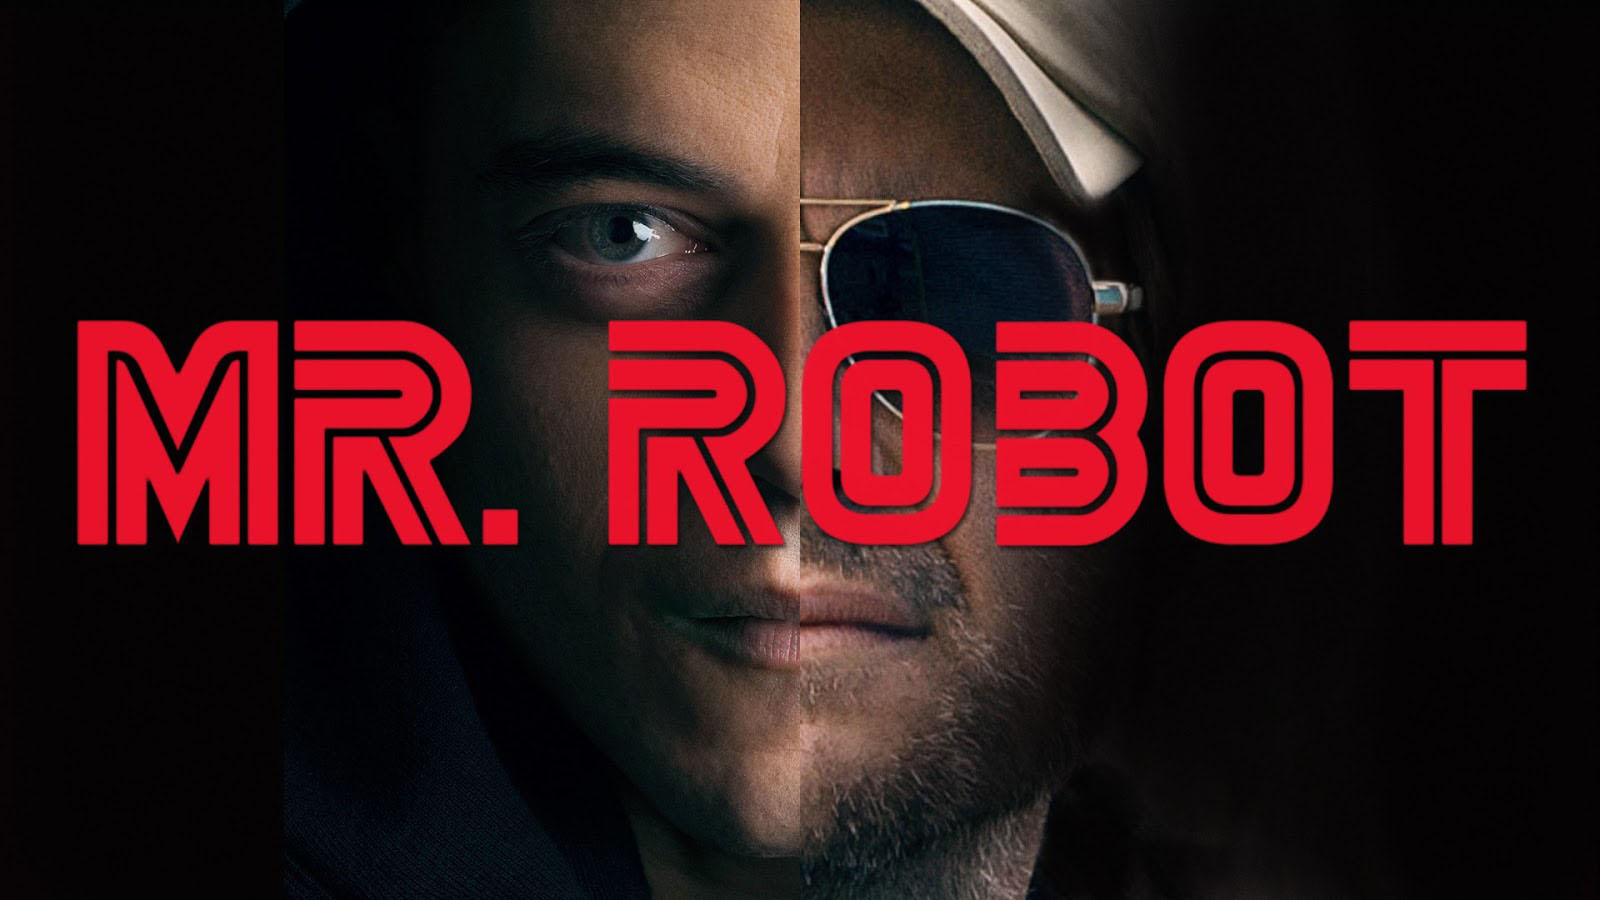 "Mr. Robot" (2015 - present)